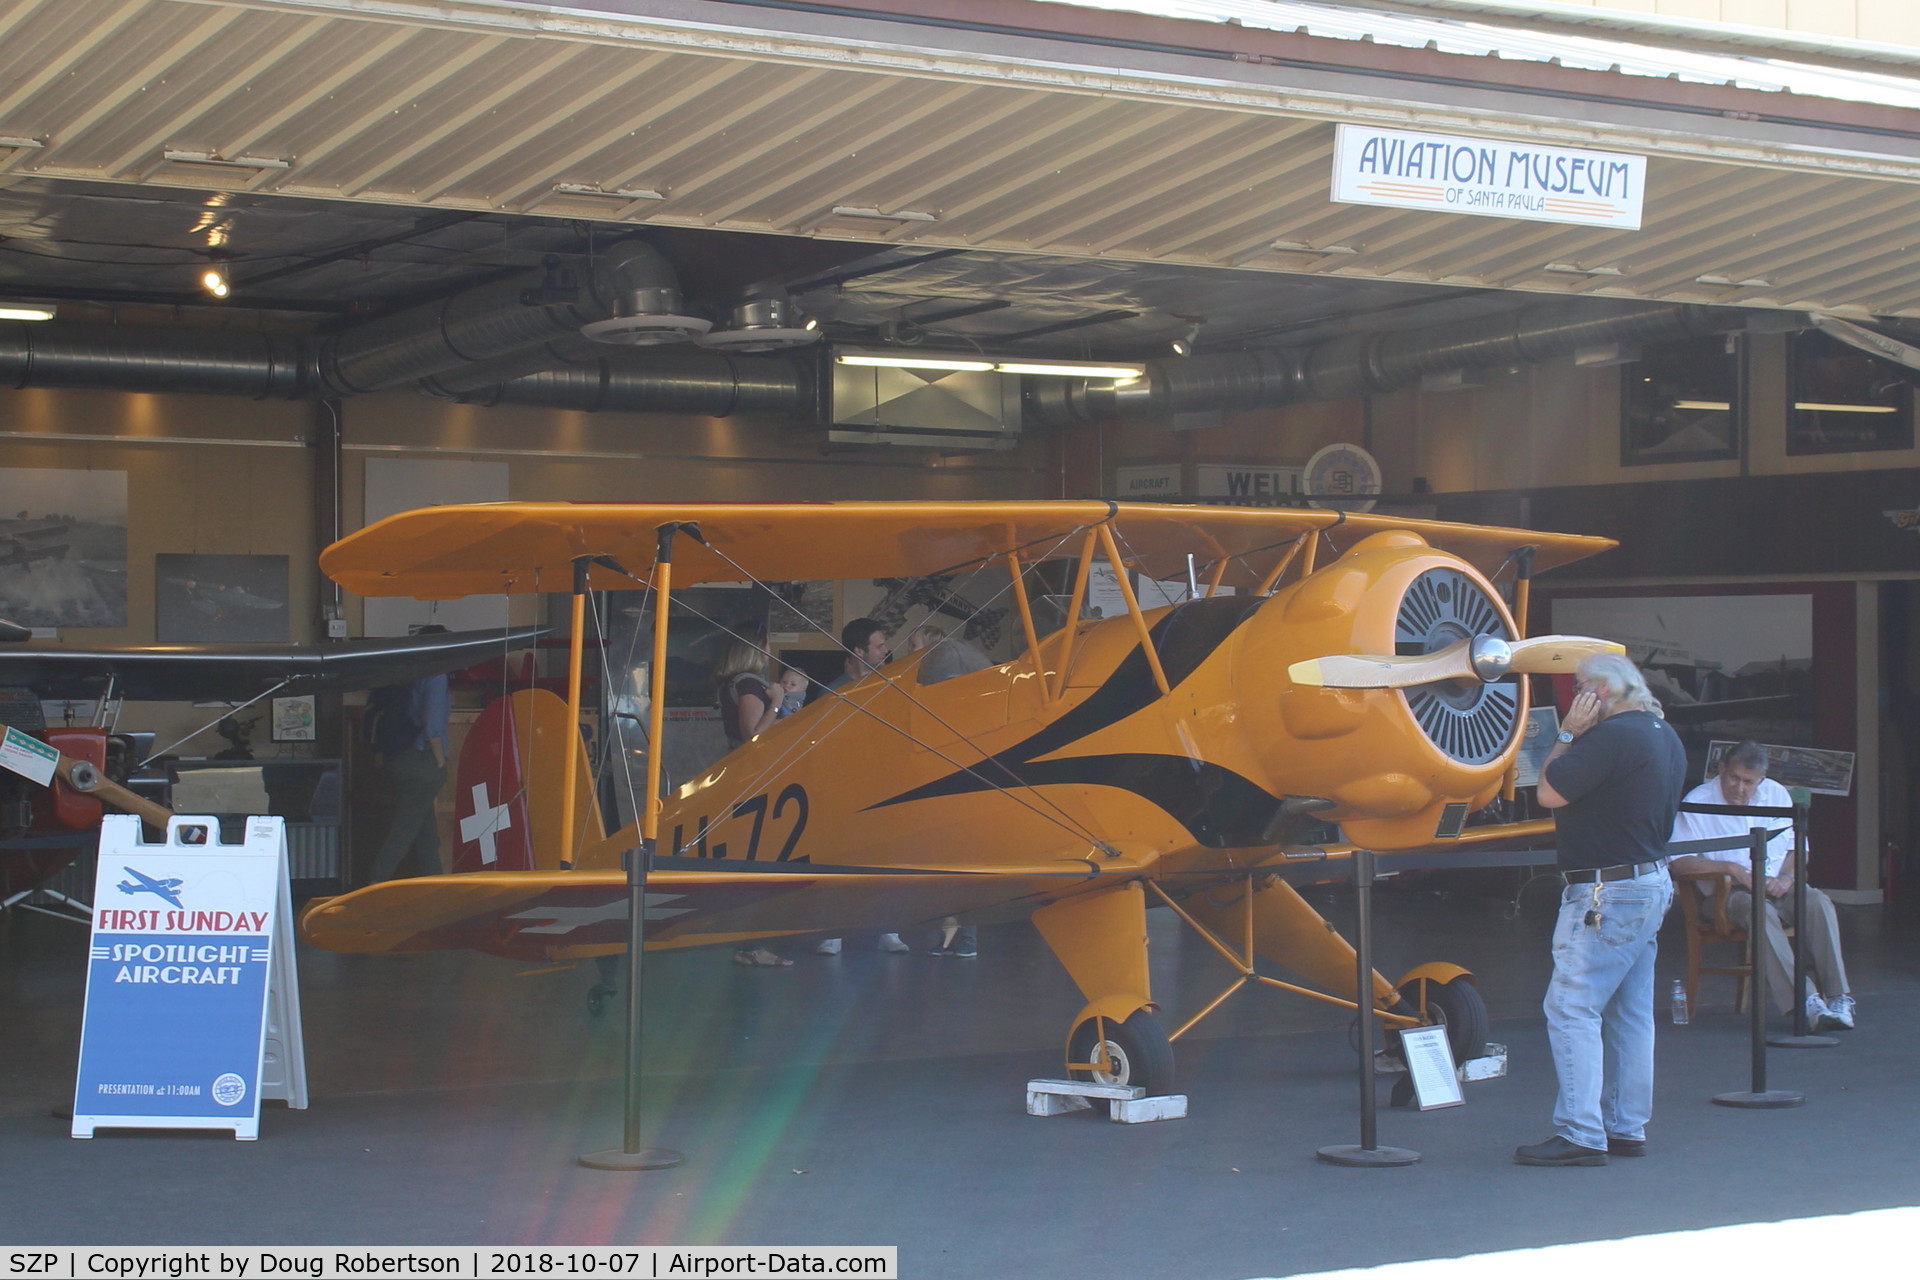 Santa Paula Airport (SZP) - First Sunday Aviation Museum of Santa Paula Featured Aircraft 1939 N100BU Bucker Jungmeister 